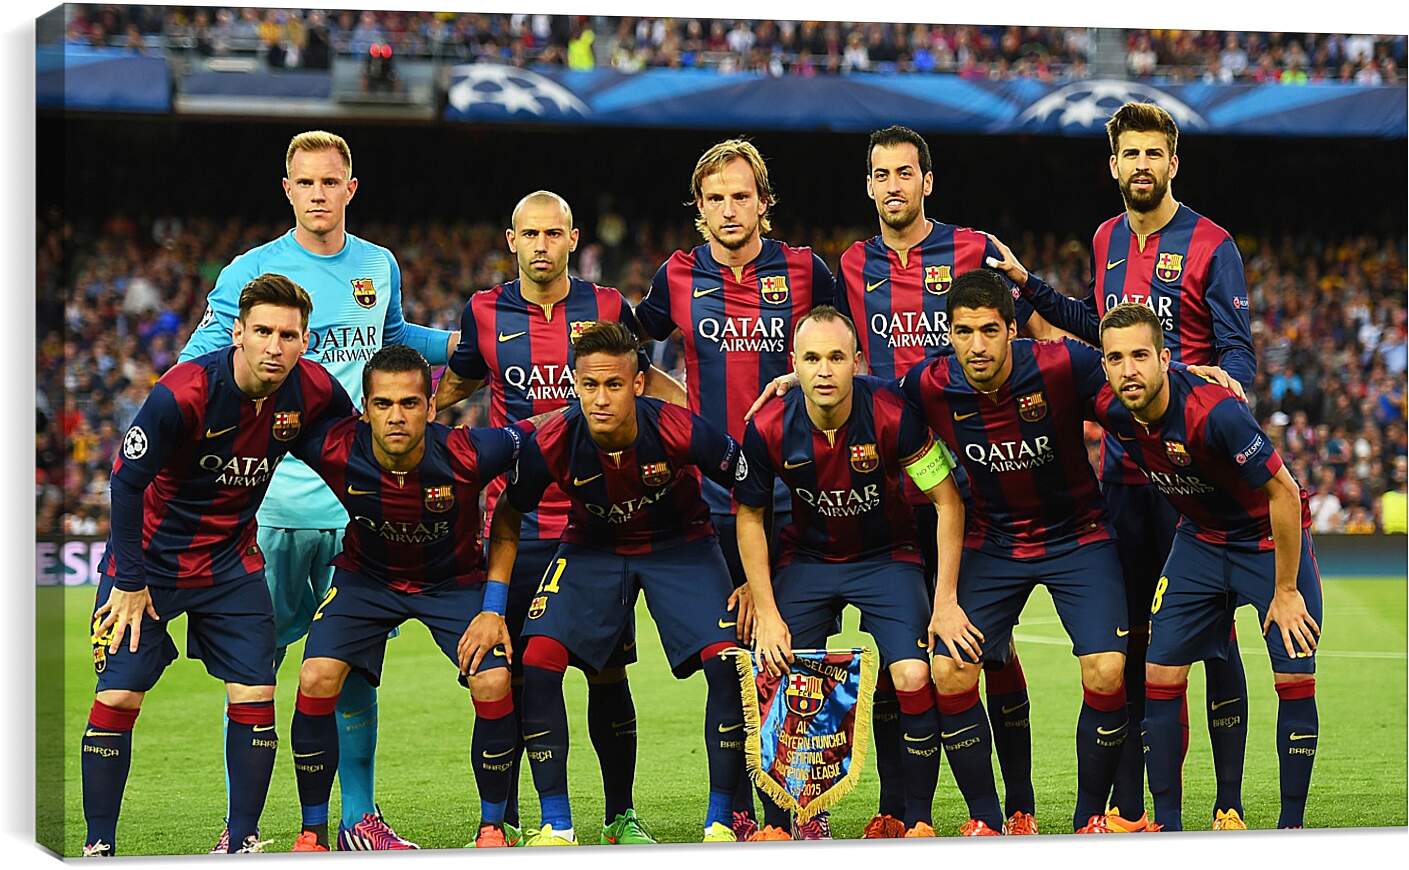 Постер и плакат - Фото перед матчем ФК Барселона. FC Barcelona